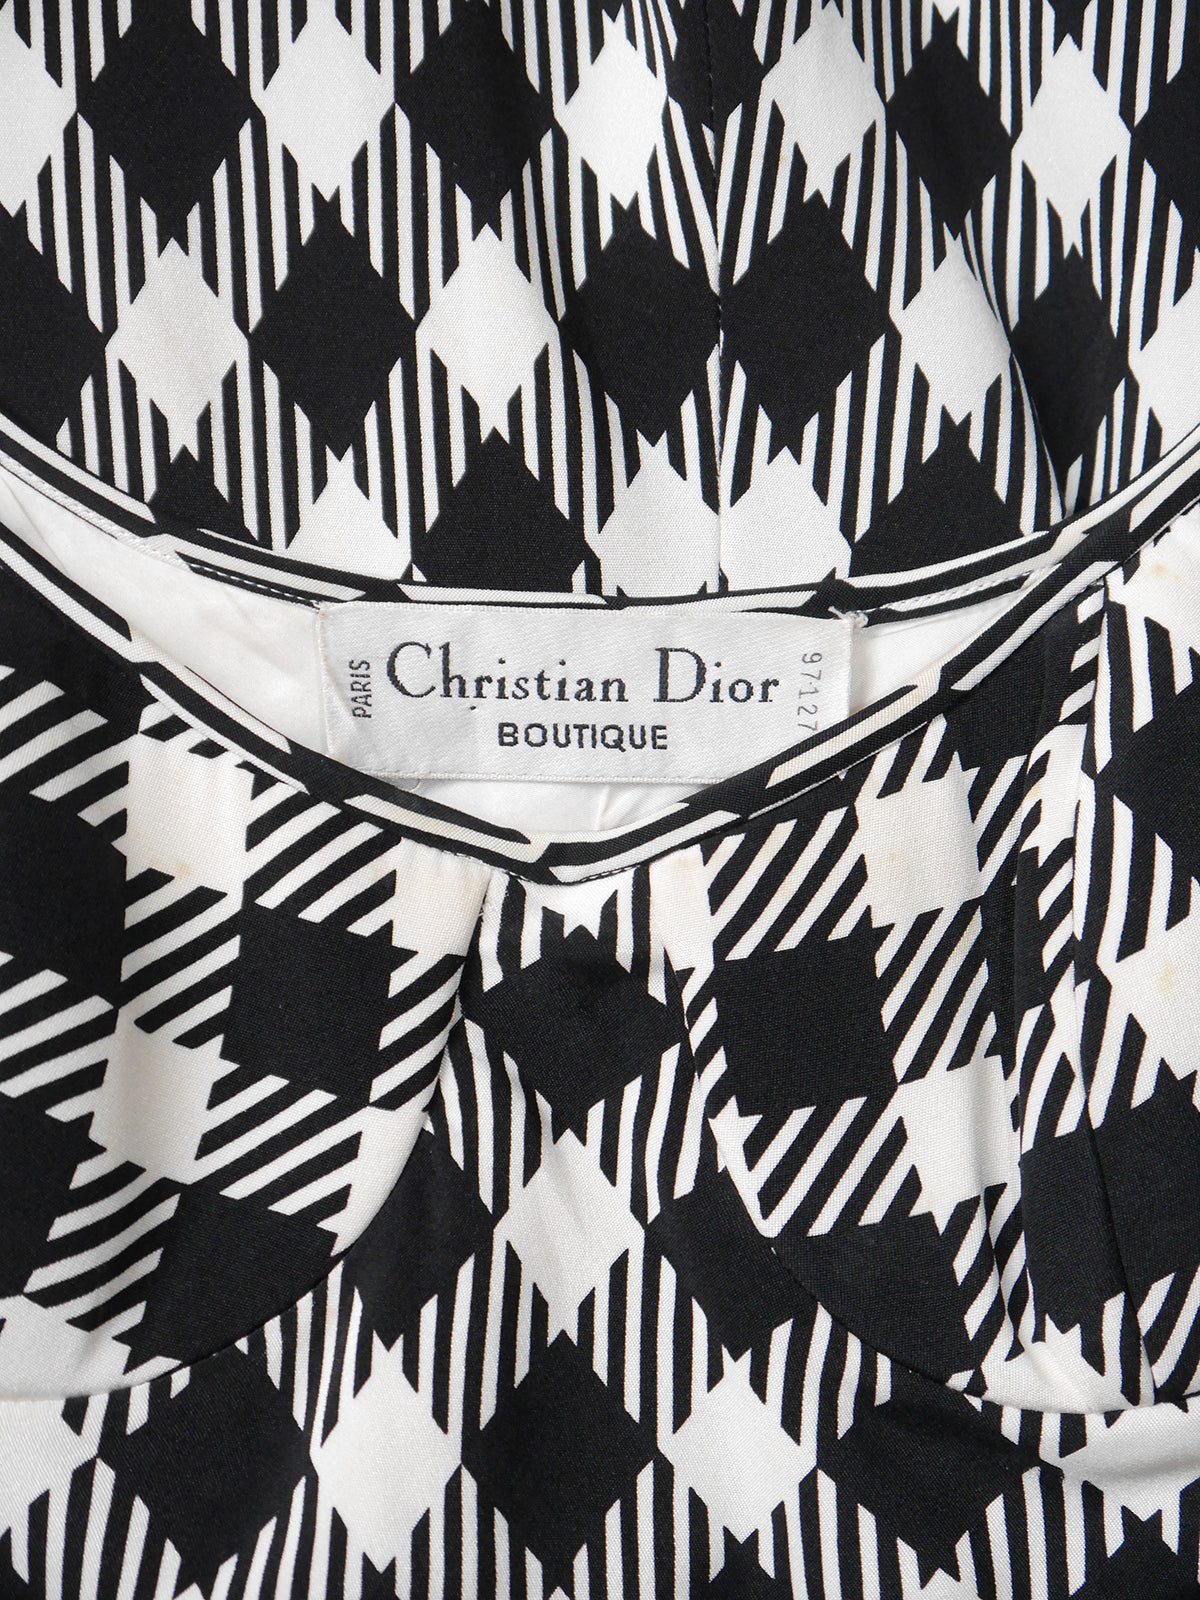 CHRISTIAN DIOR Spring 1995 Vintage Houndstooth Maxi Dress